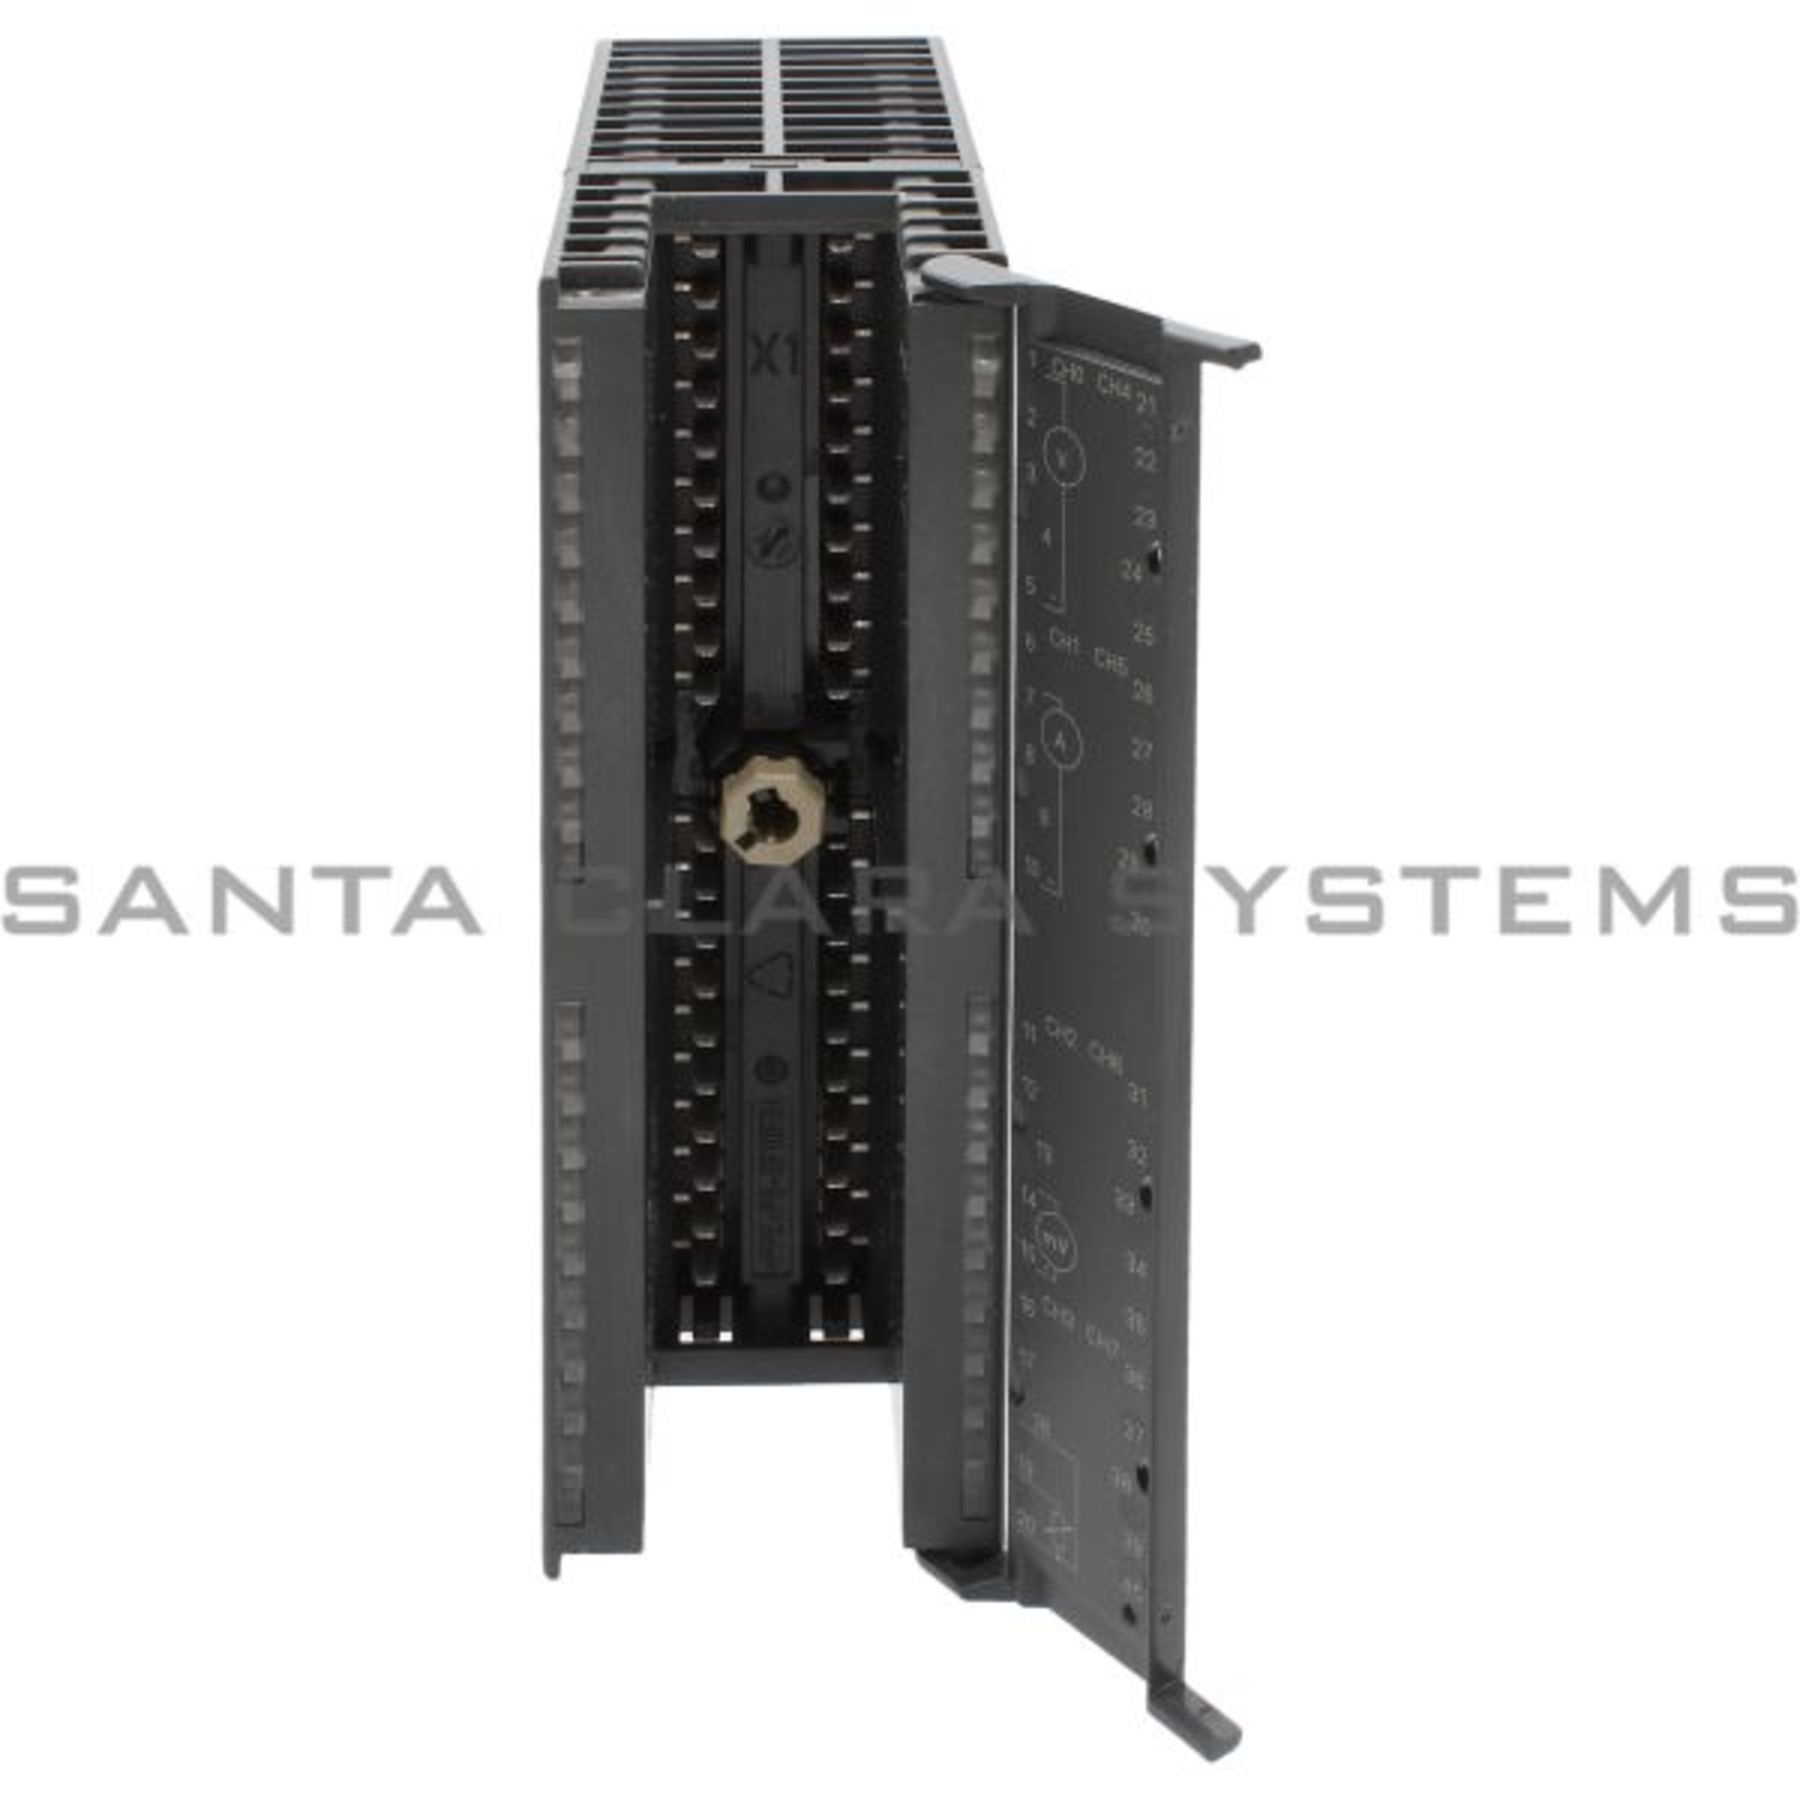 Siemens 6ES7 331-1KF02-0AB0 Analog Input Module for sale online